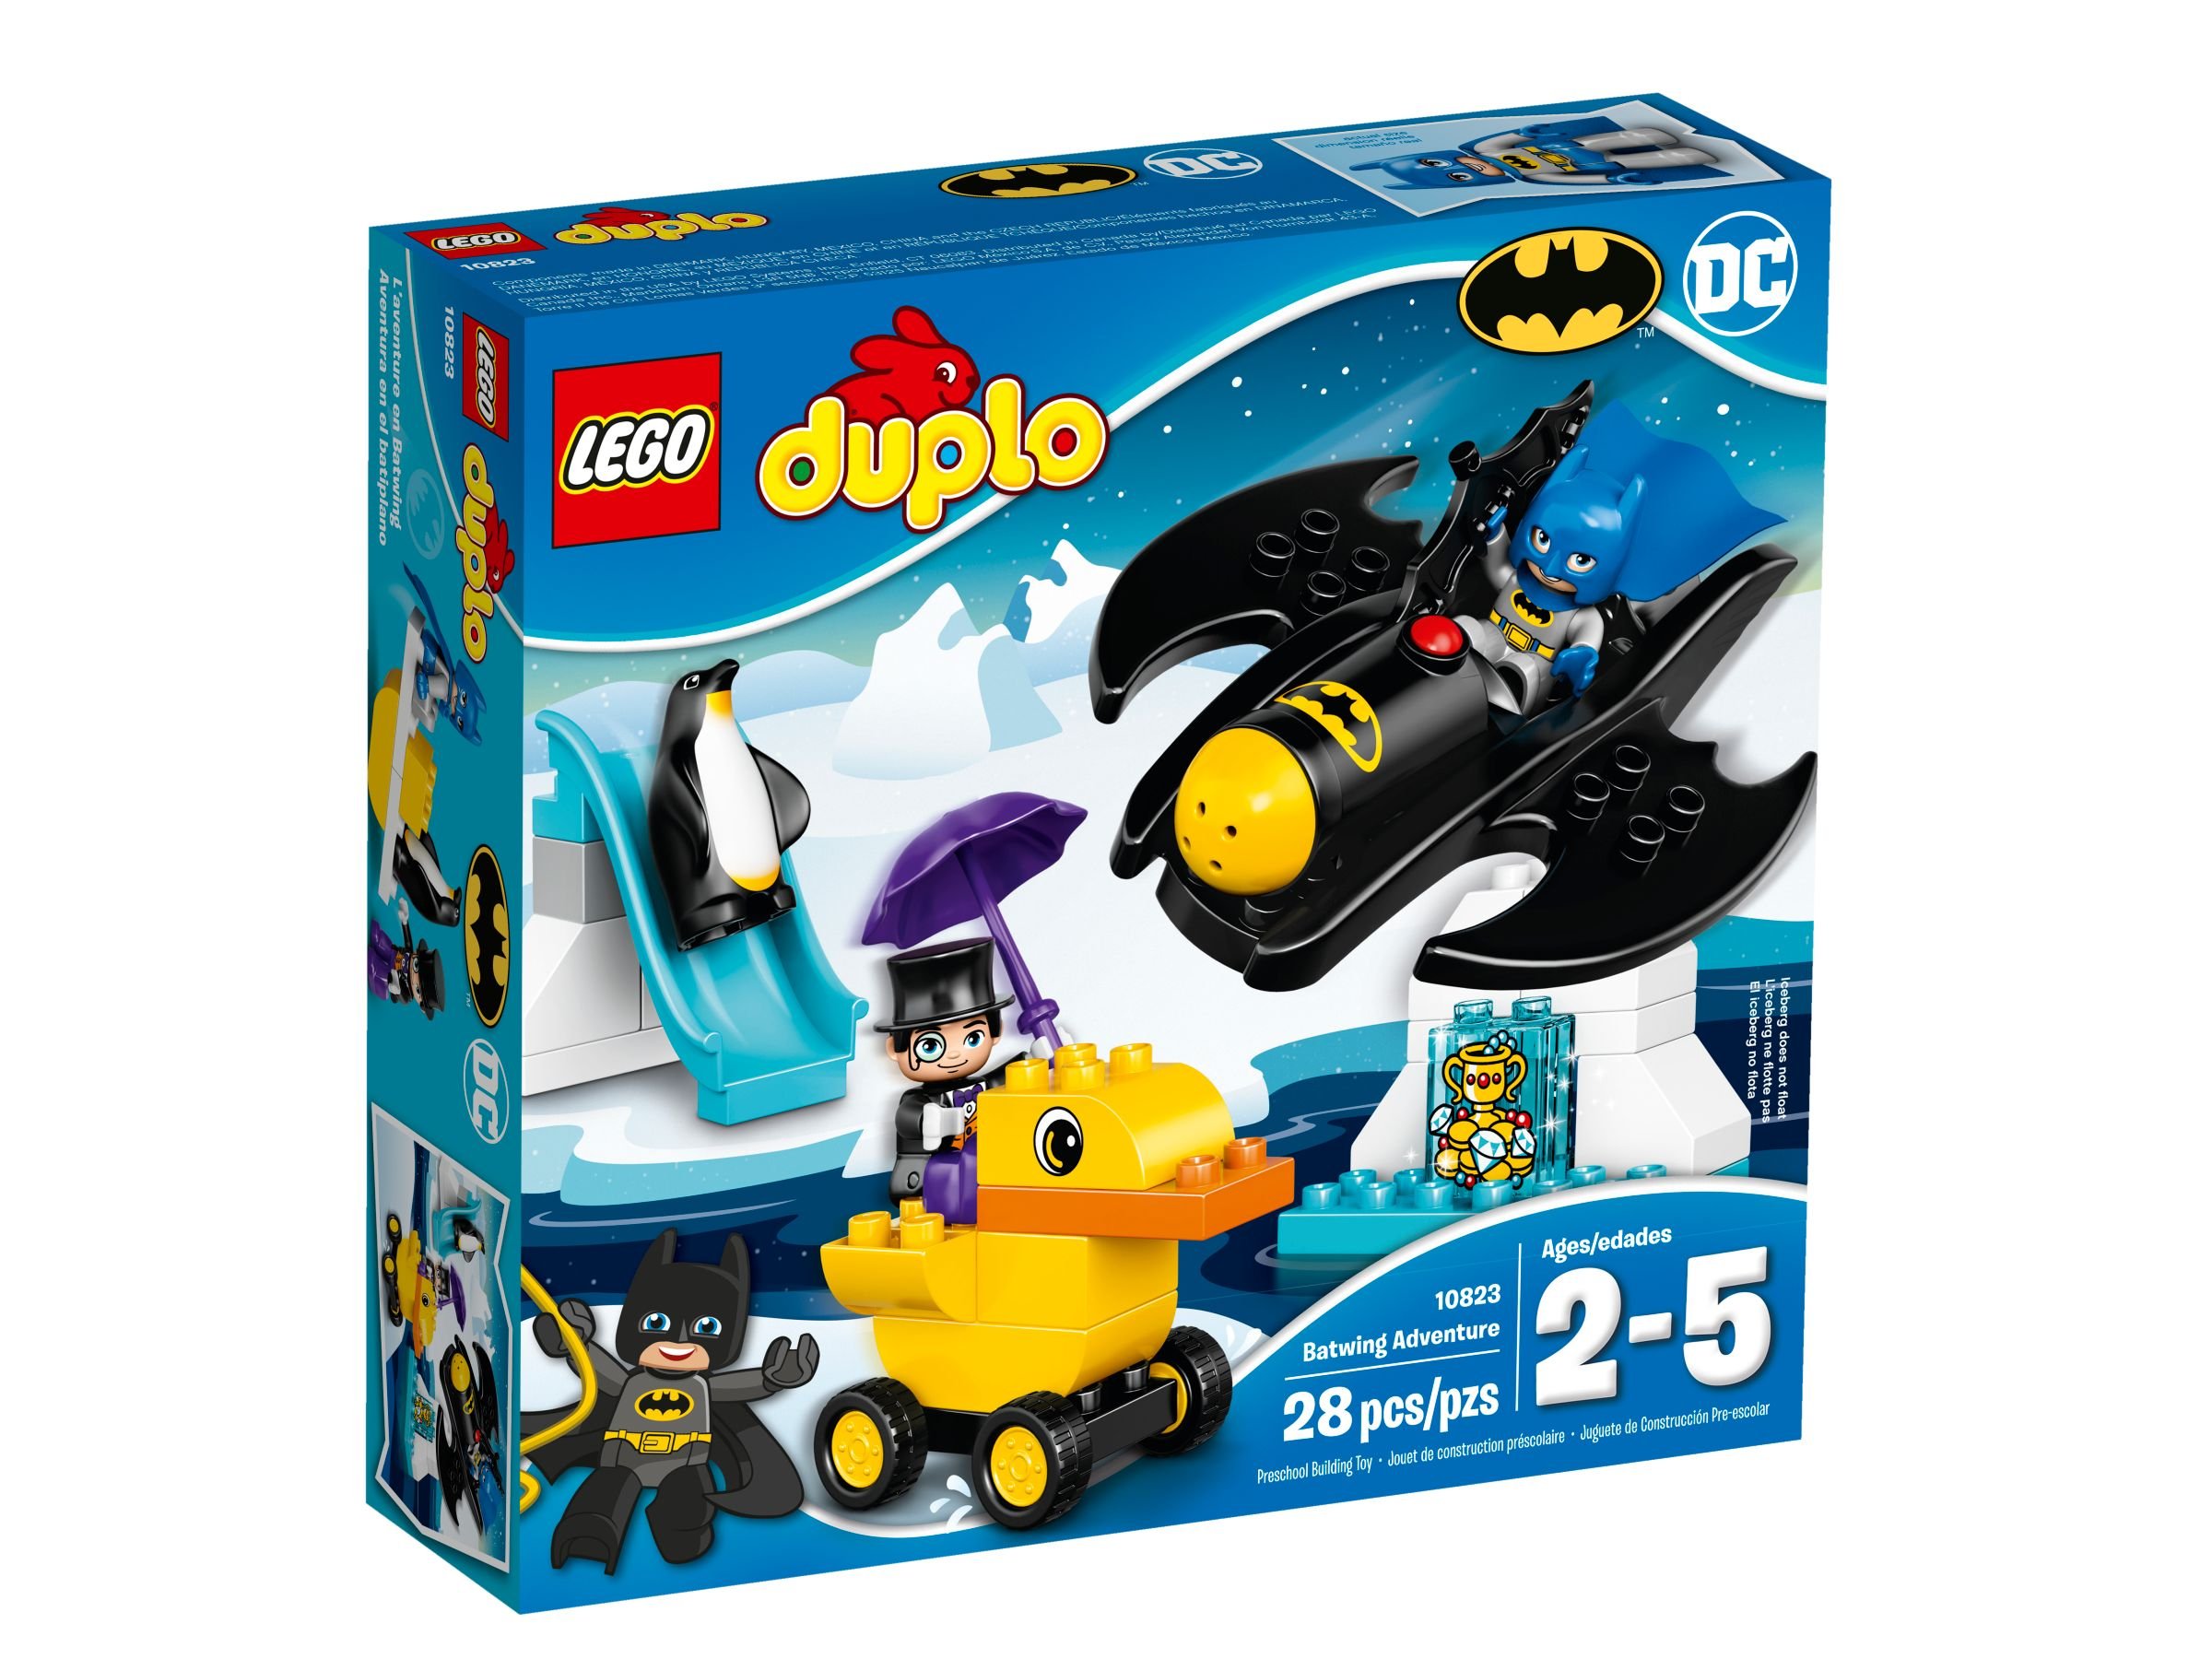 LEGO Duplo 10823 Batwing-Abenteuer LEGO_10823_alt1.jpg